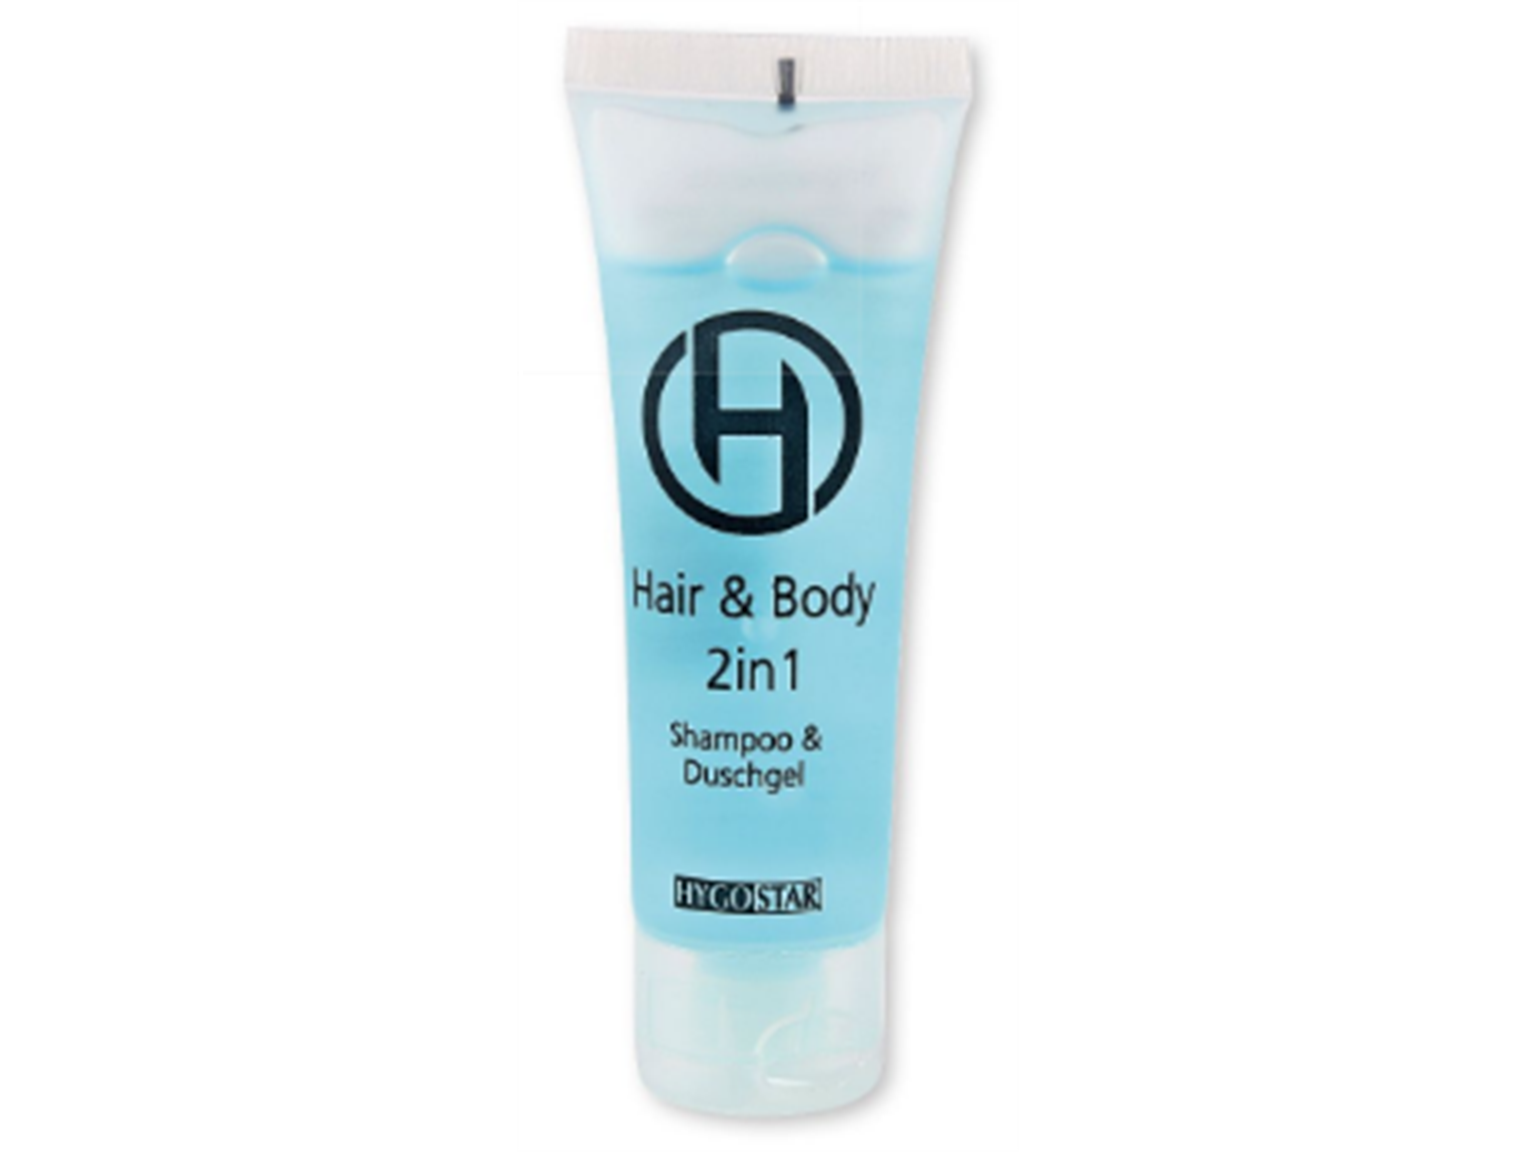 HAIR & BODY HYGOSTAR  2in1, Tube 30 ml, blau